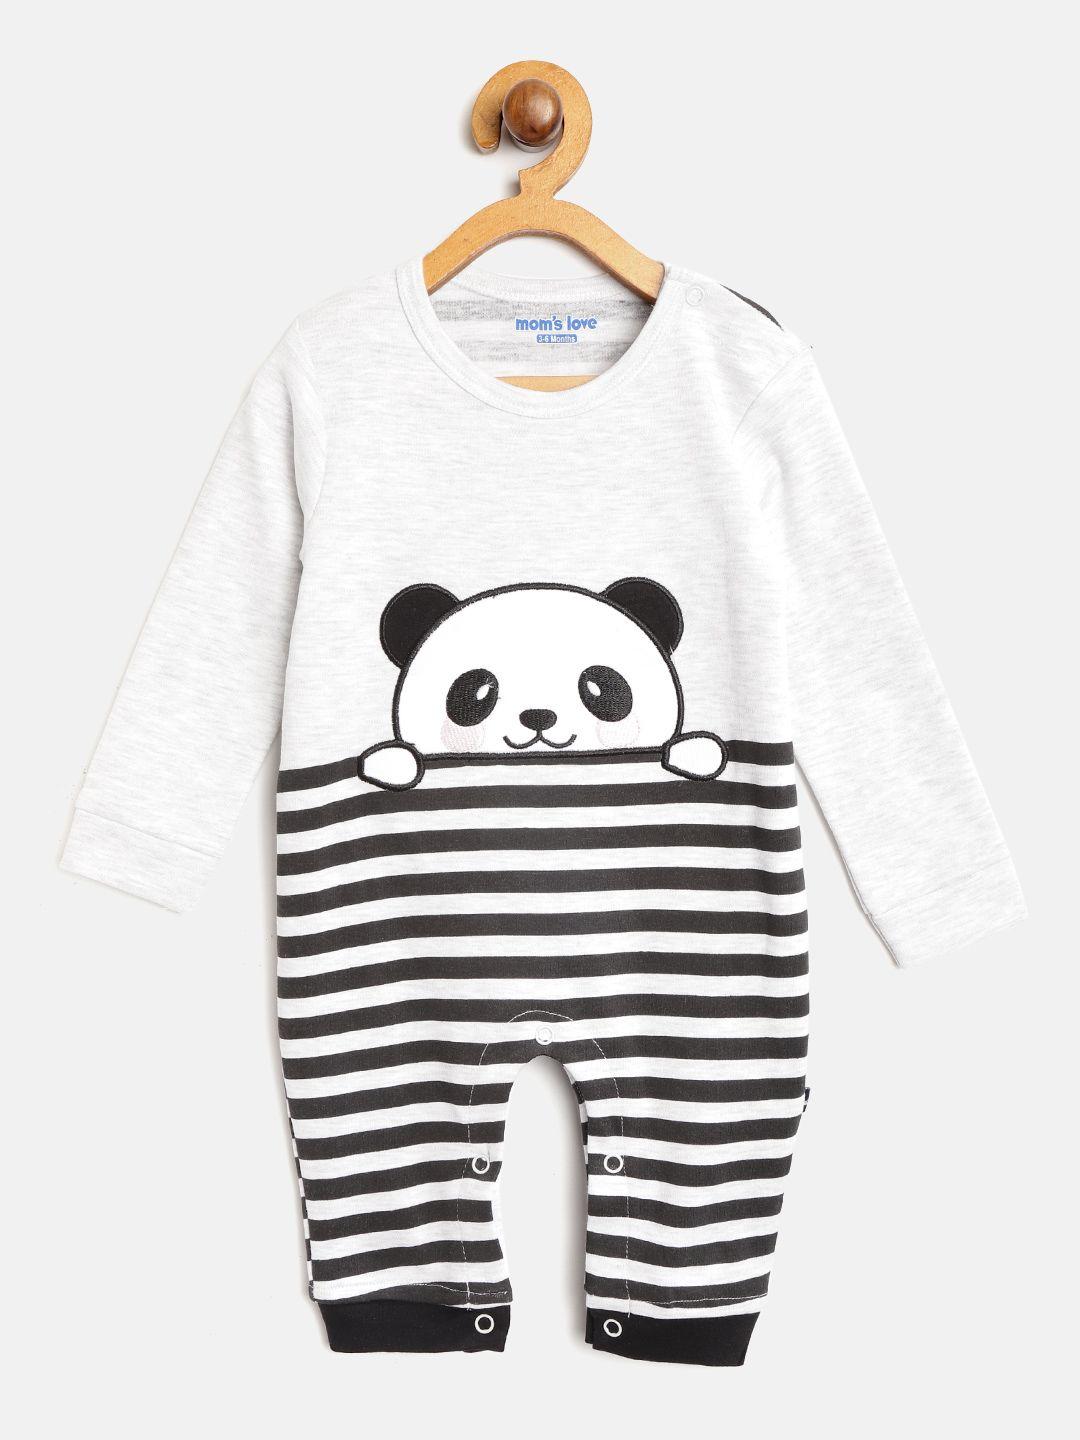 moms-love-boys-black-&-grey-melange-striped-rompers-with-panda-applique-detail